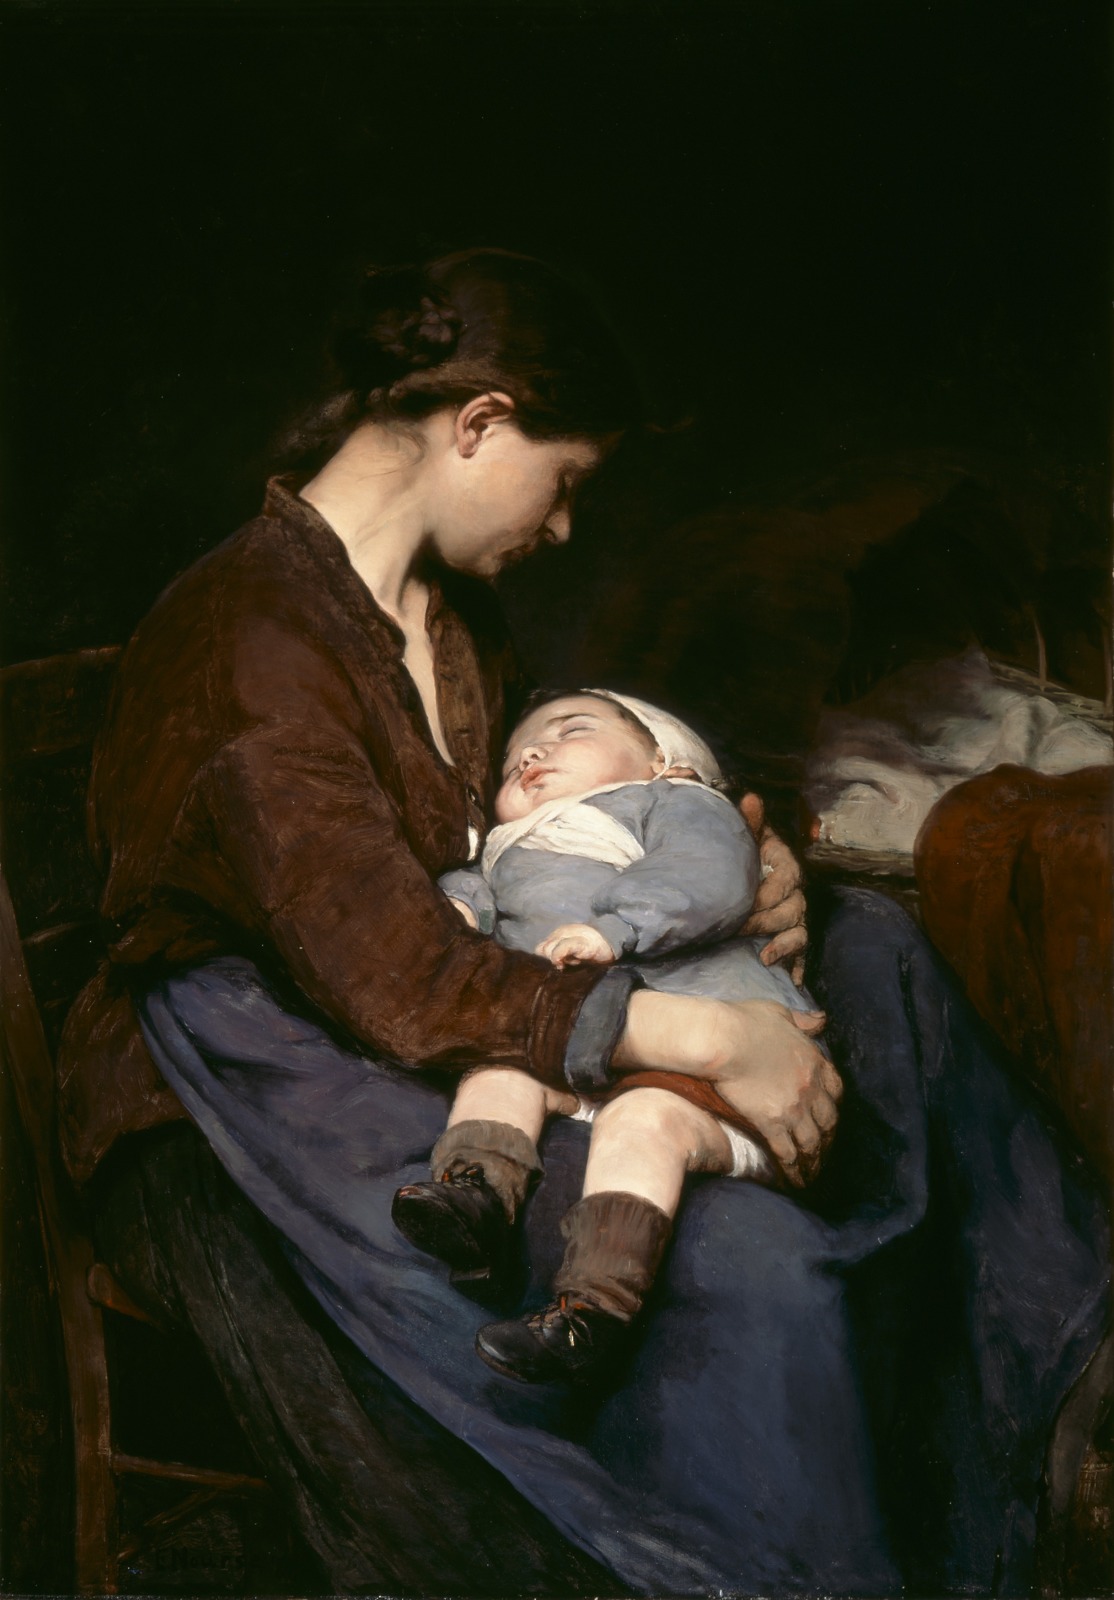 Matka by Elizabeth Nourse - 1888 - 115.6 x 81.3 cm 